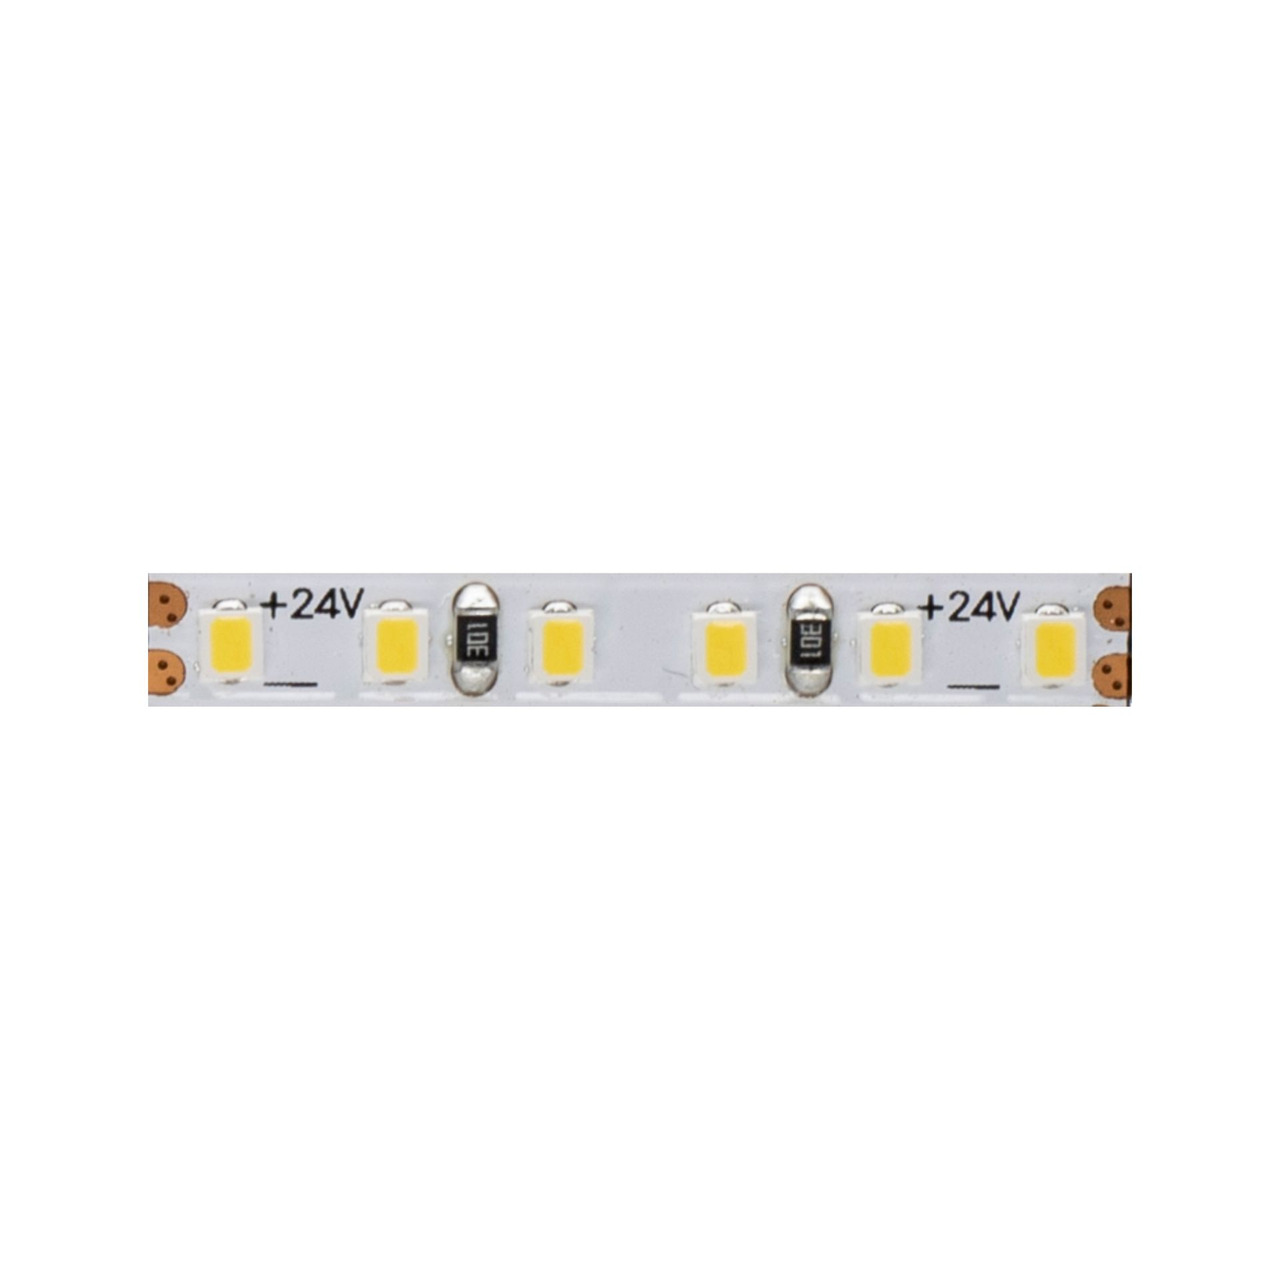 Beneito 5-m-LED-Streifen FINE-49- 50 W- 24 V DC- 6000 K- 90 Ra- 10 W-m- 740 lm-m- 204 LEDs-m- IP20 unter Beleuchtung